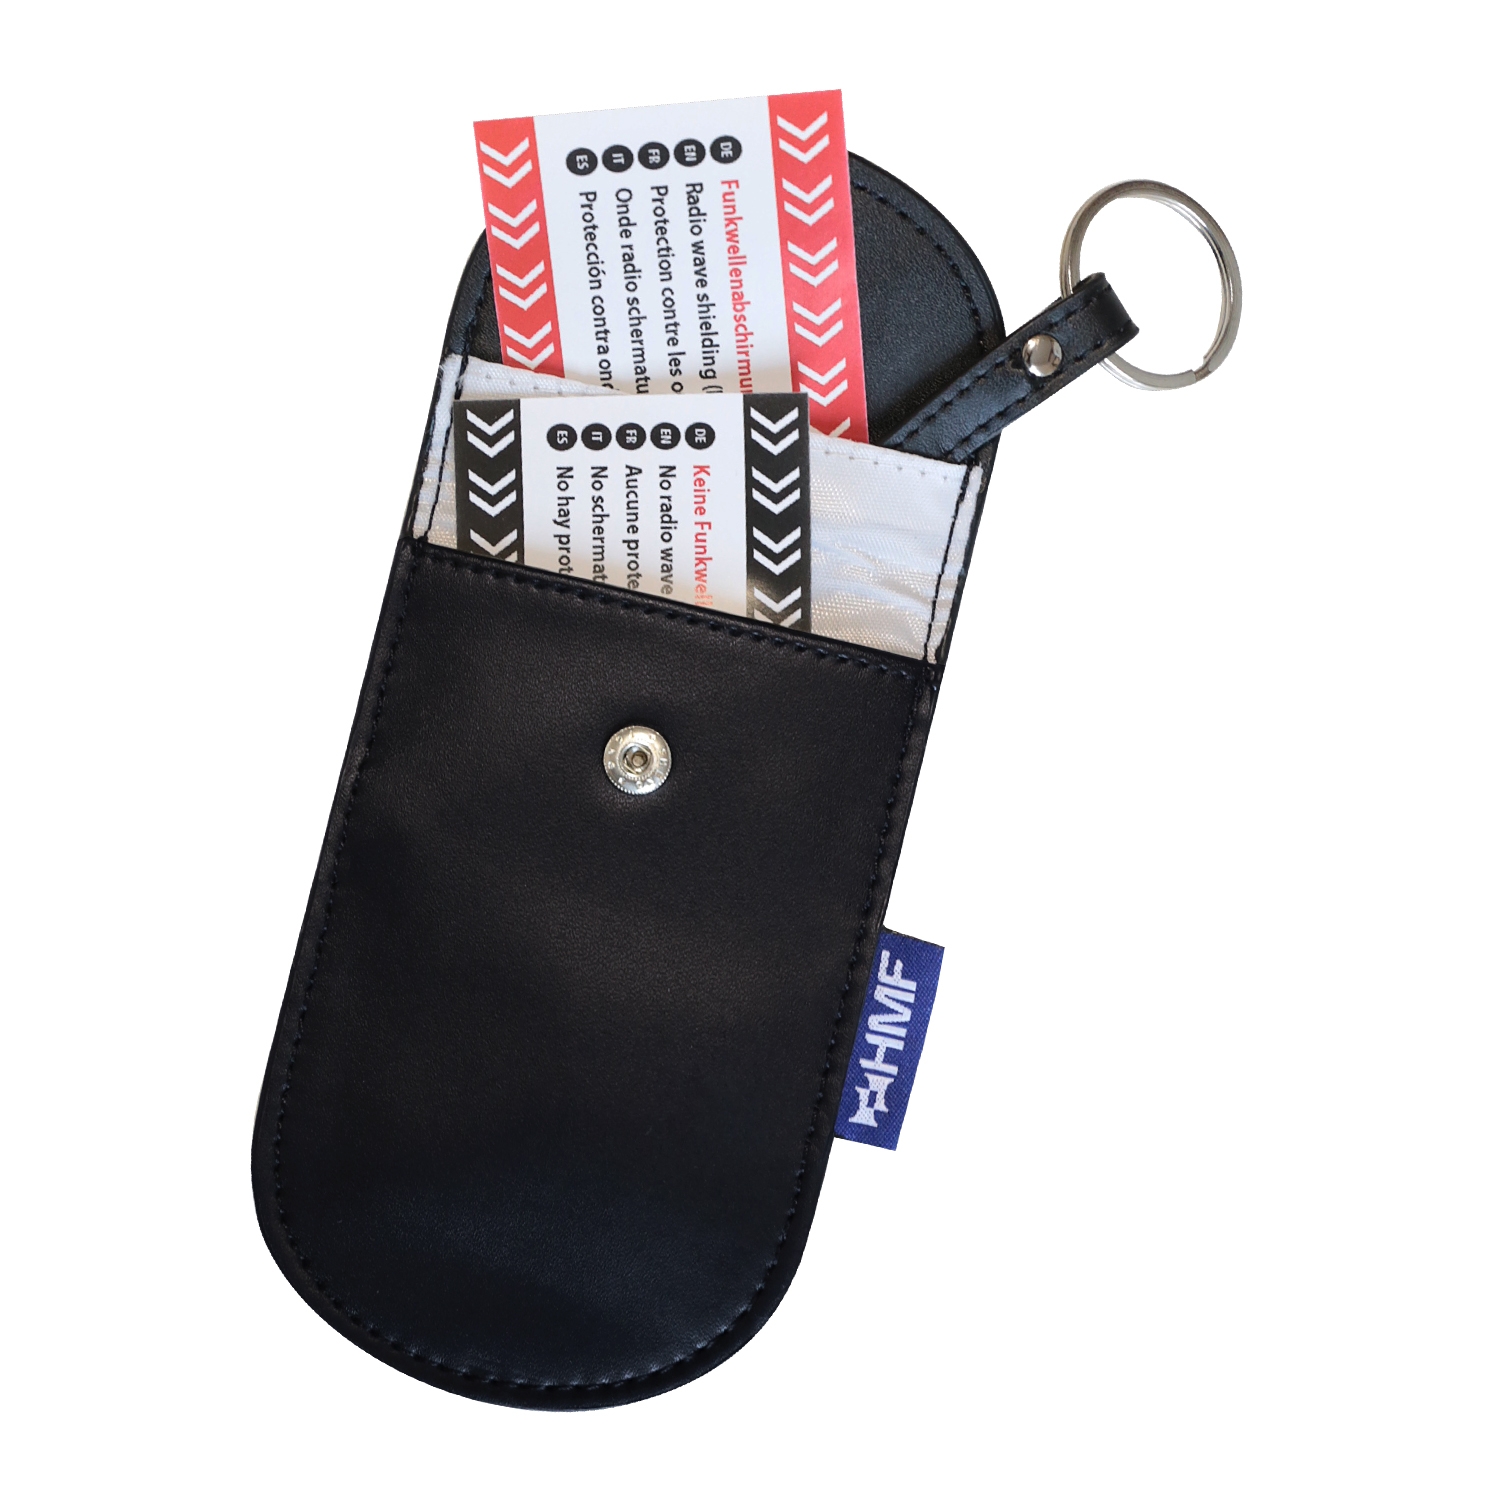 2 Stück FOAMO Keyless Go Schutz Autoschlüssel Funkschlüssel RFID